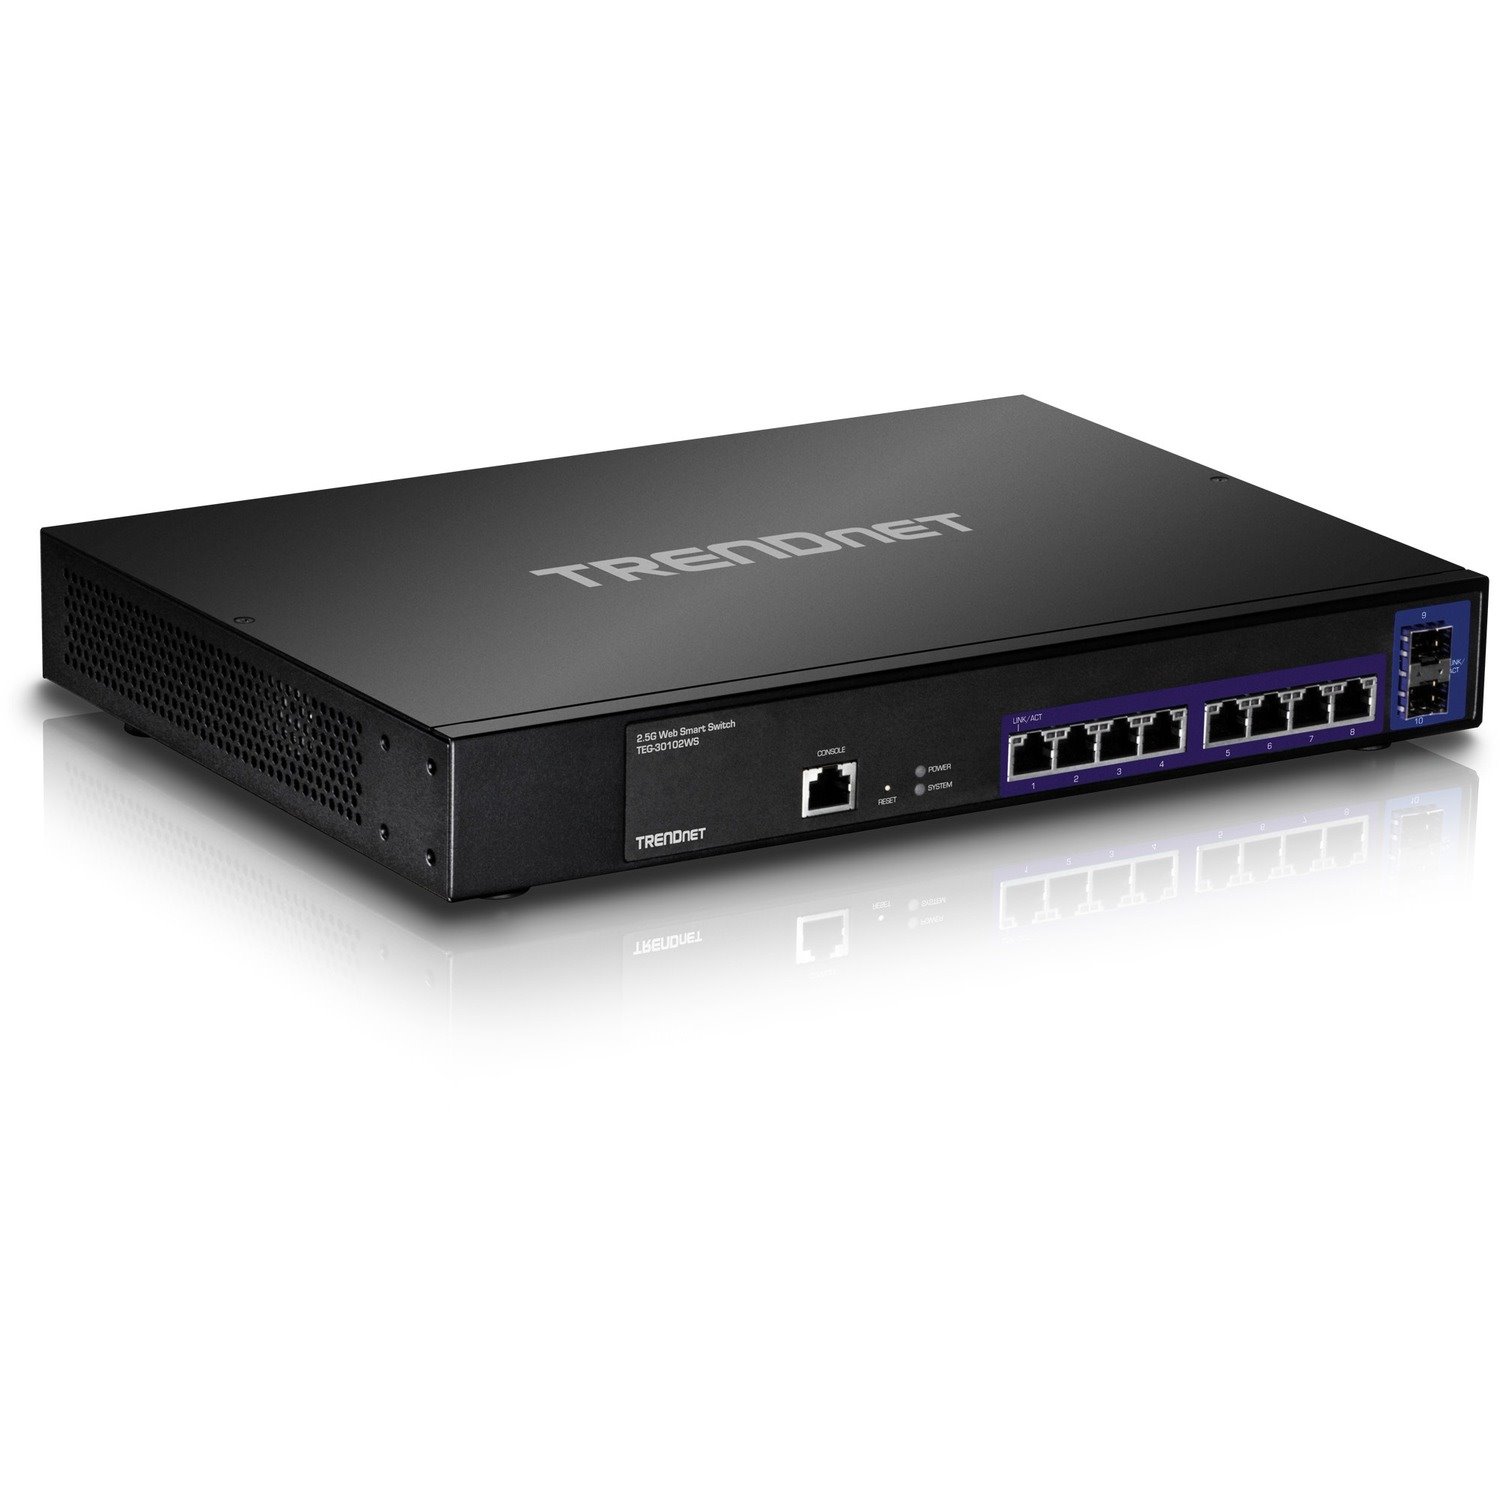 TRENDnet 10-Port 2.5GBASE-T Web Smart Switch; 8 x 2.5GBASE-T RJ-45 Ports; 2 x 10G SFP+ Slots; Lifetime Protection; TEG-30102WS